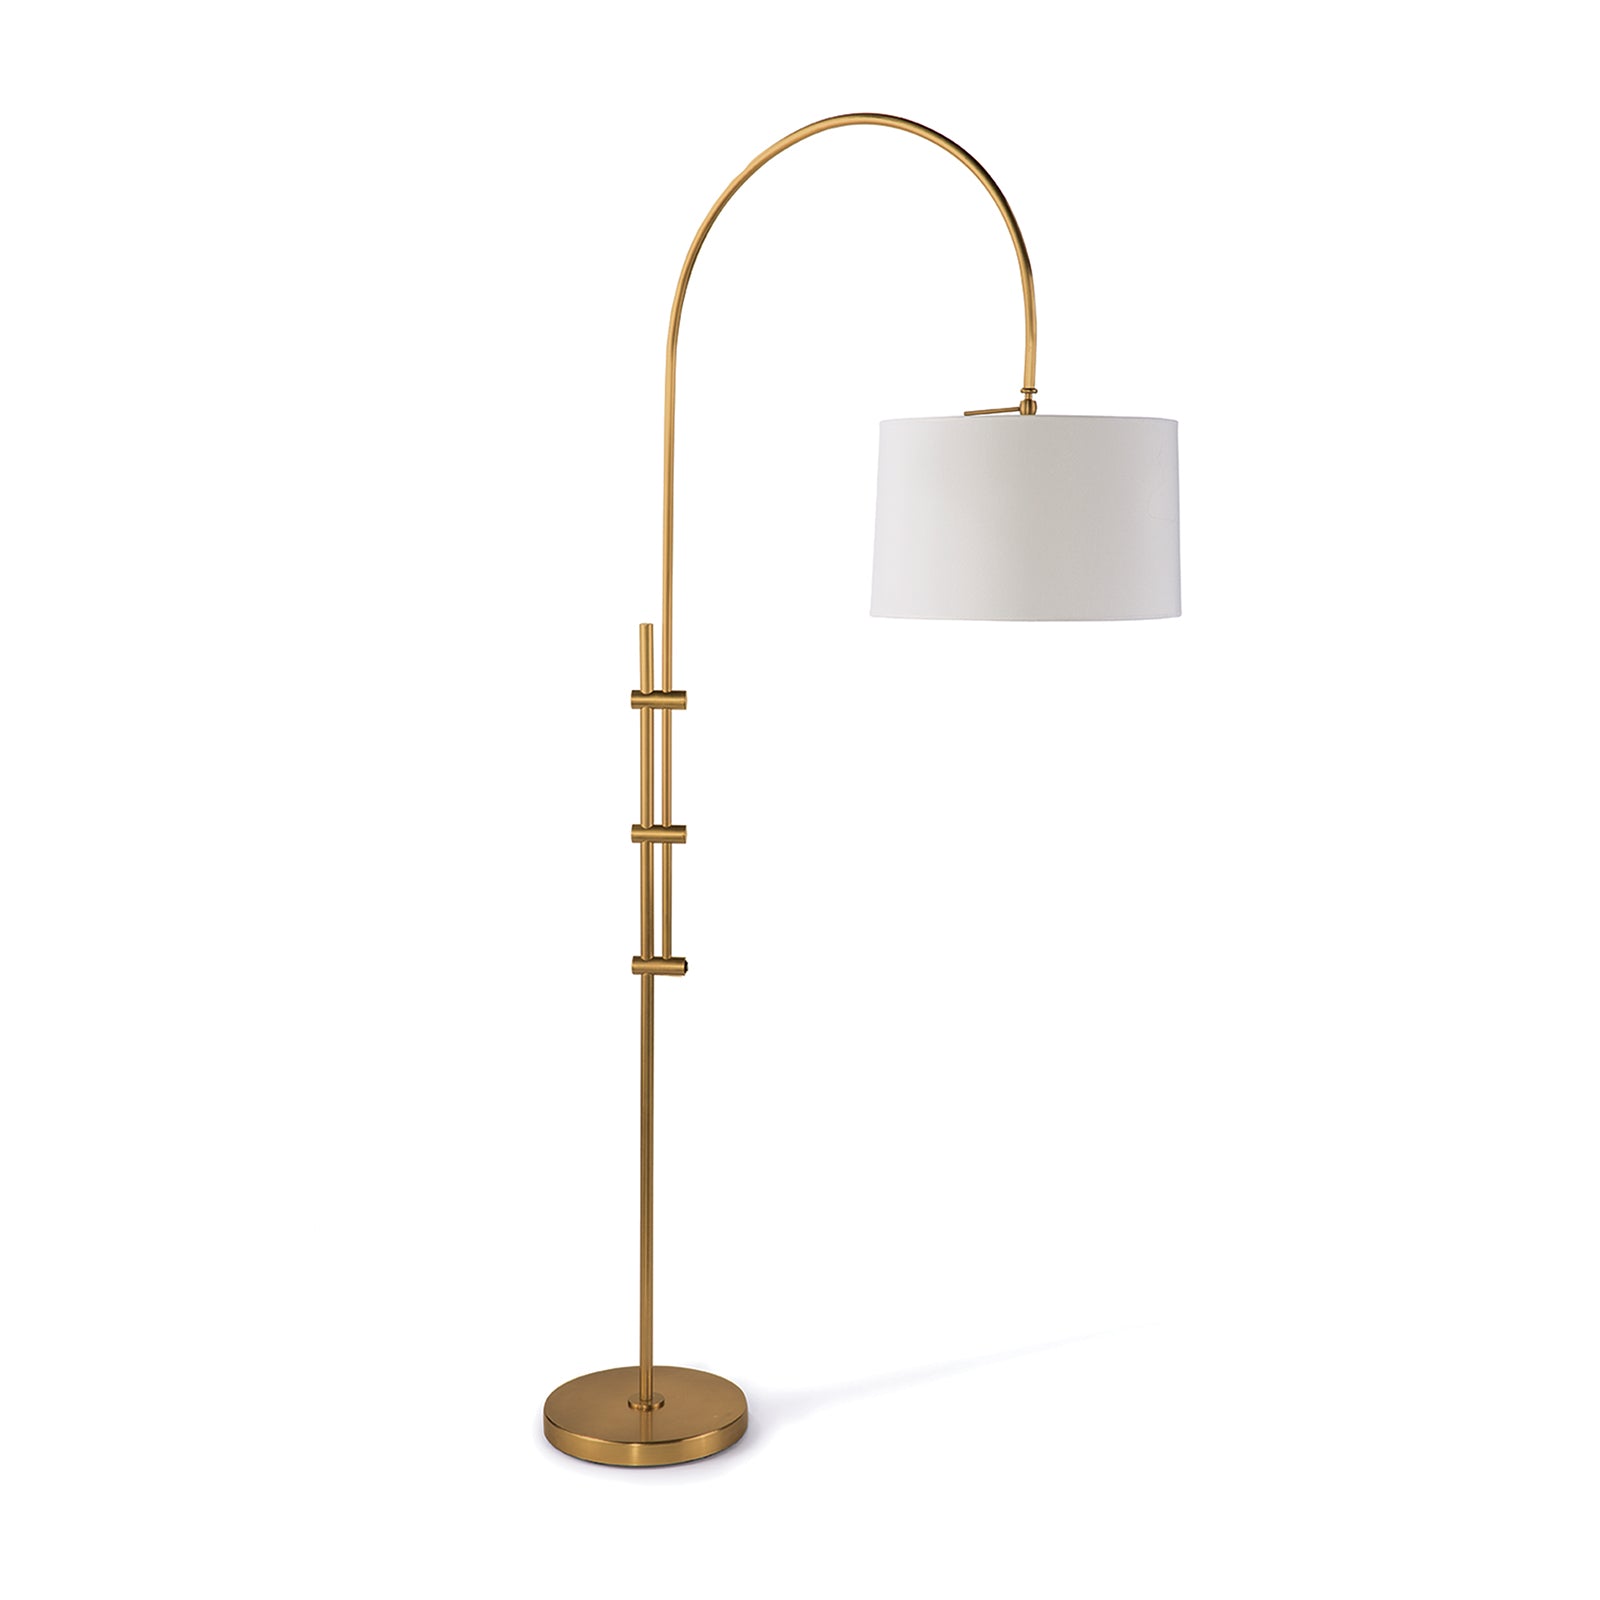 Watson Arc Floor Lamp in natural brass